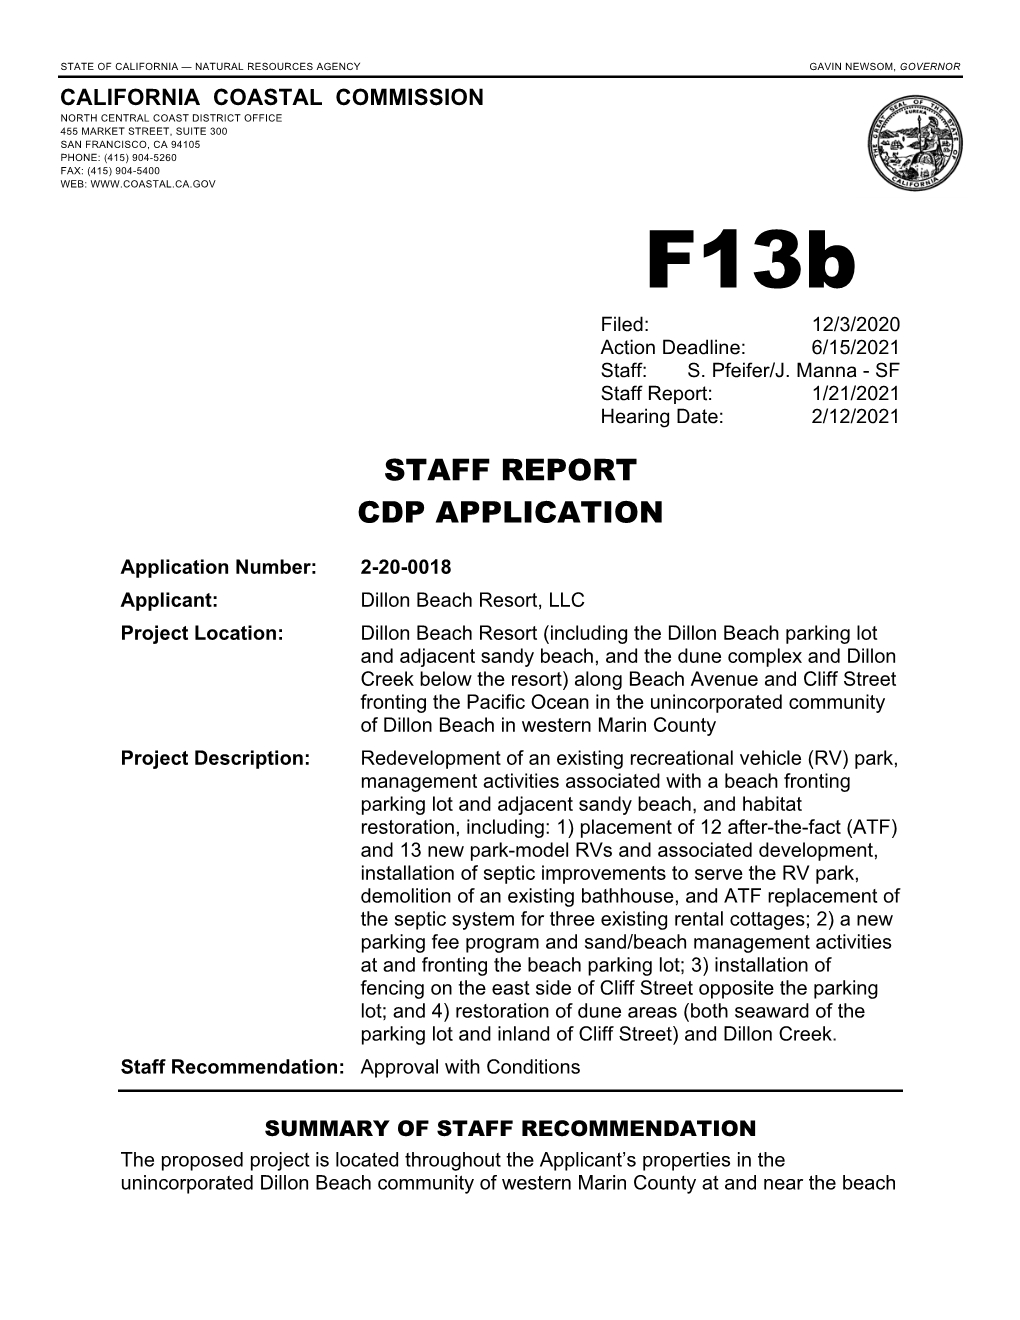 Staff Report Cdp Application